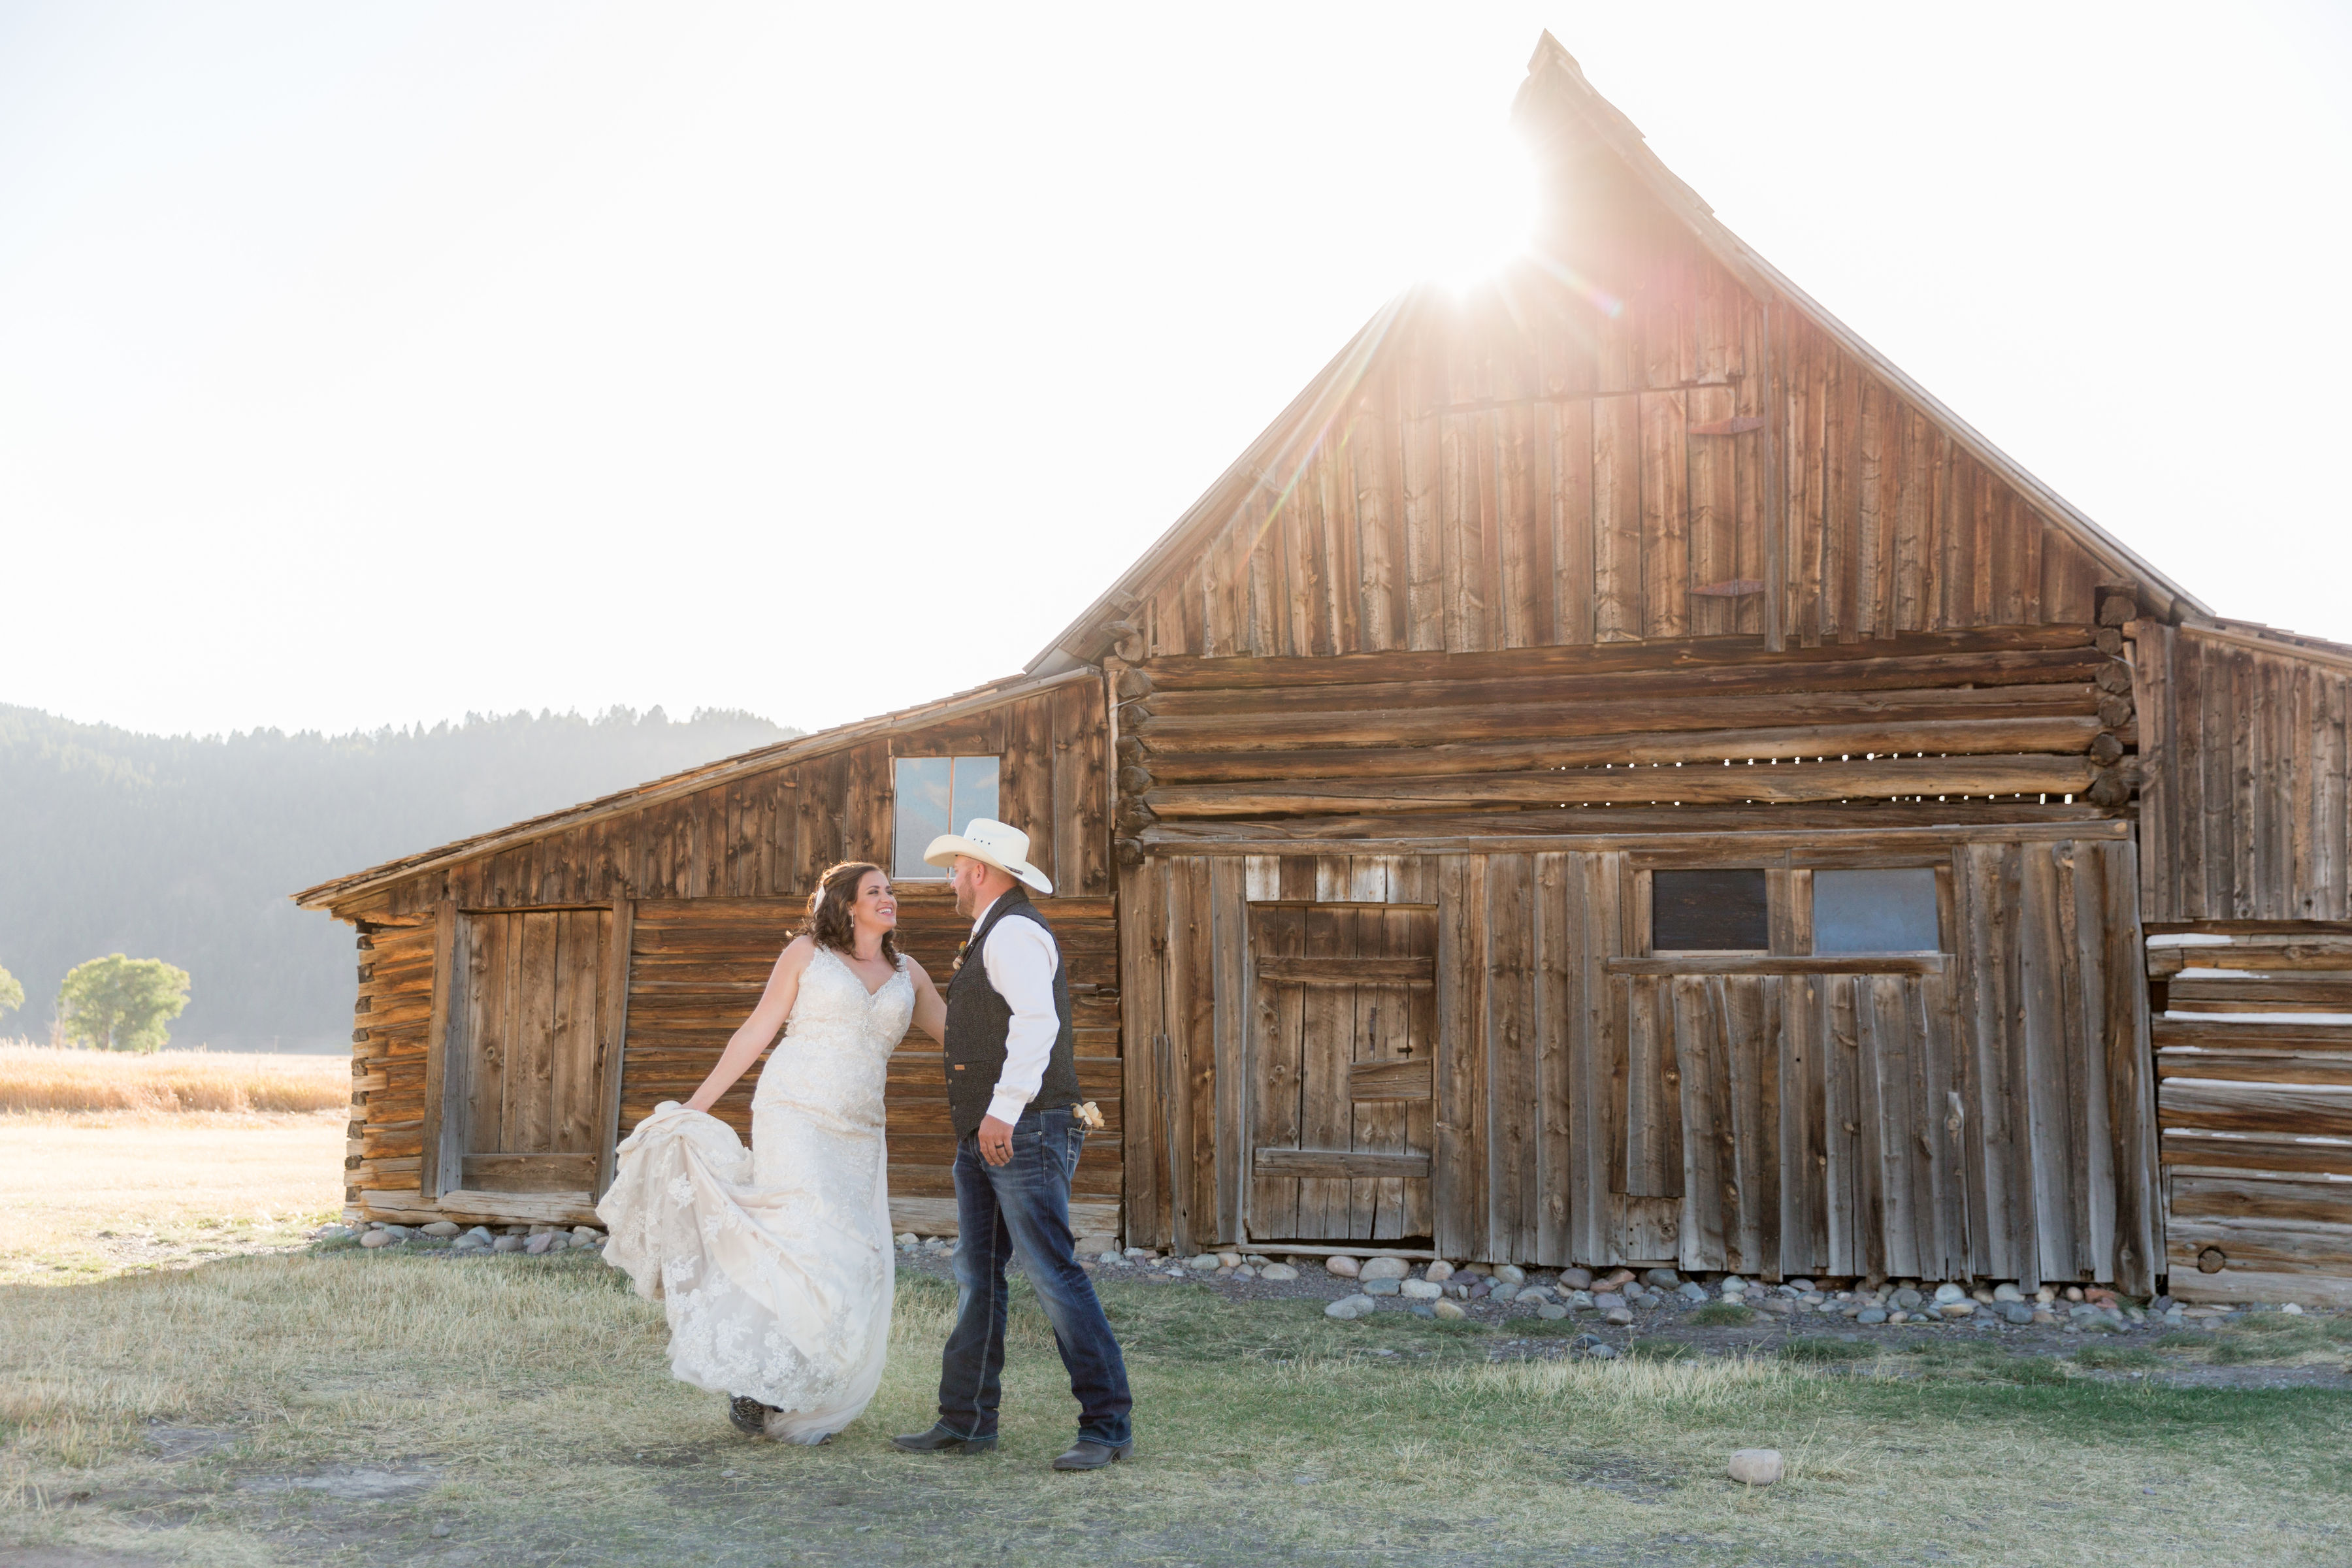 Fall weddings in Wyoming